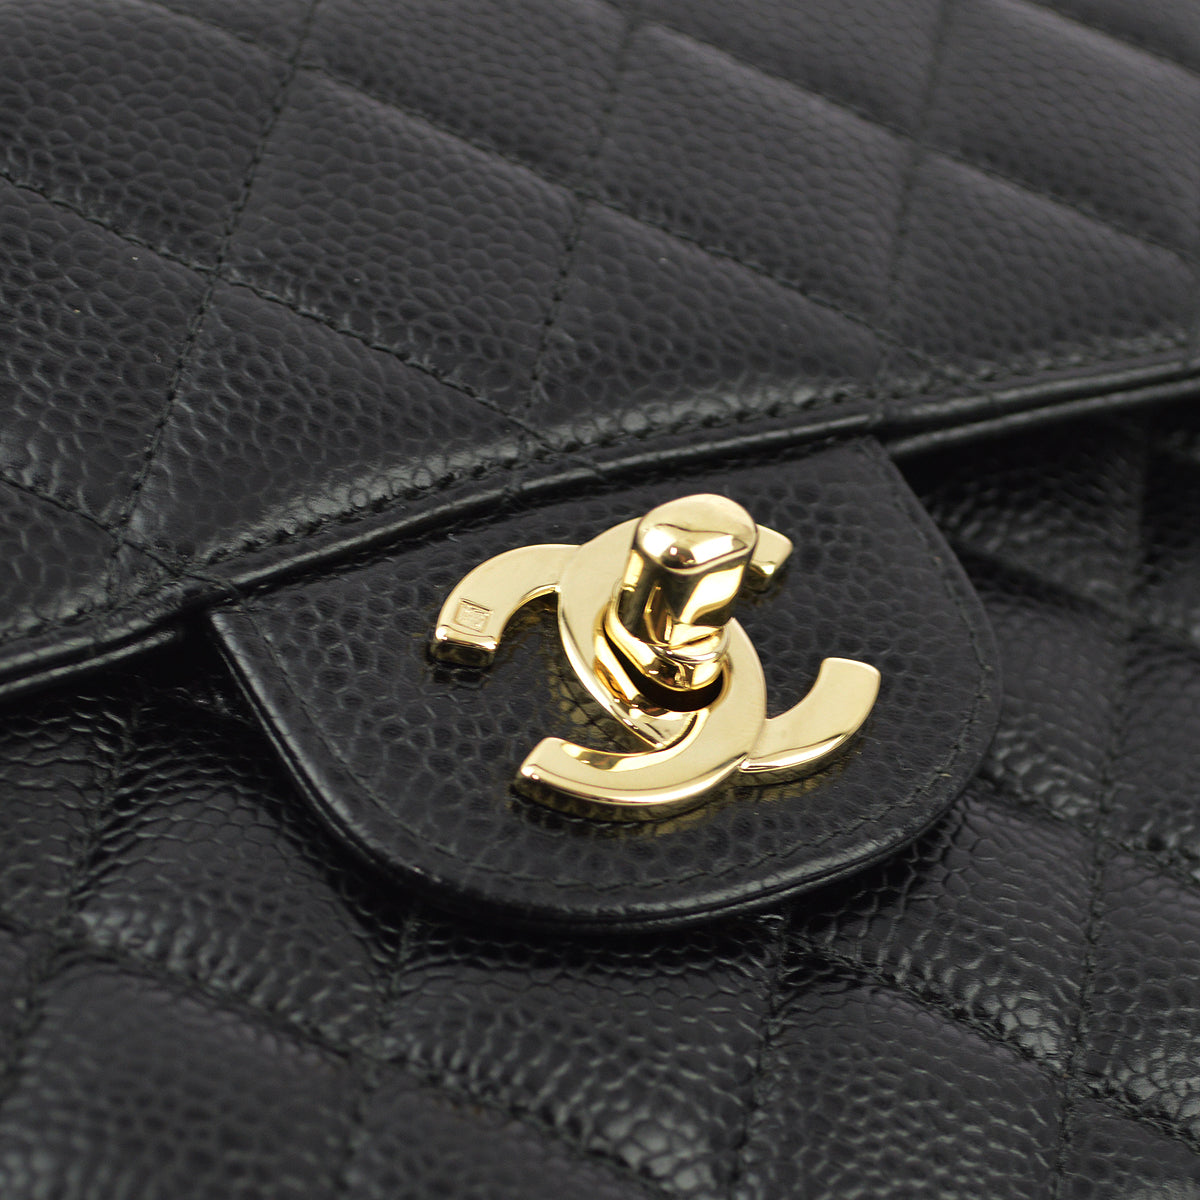 Chanel Black Caviar 小號經典雙翻蓋單肩包